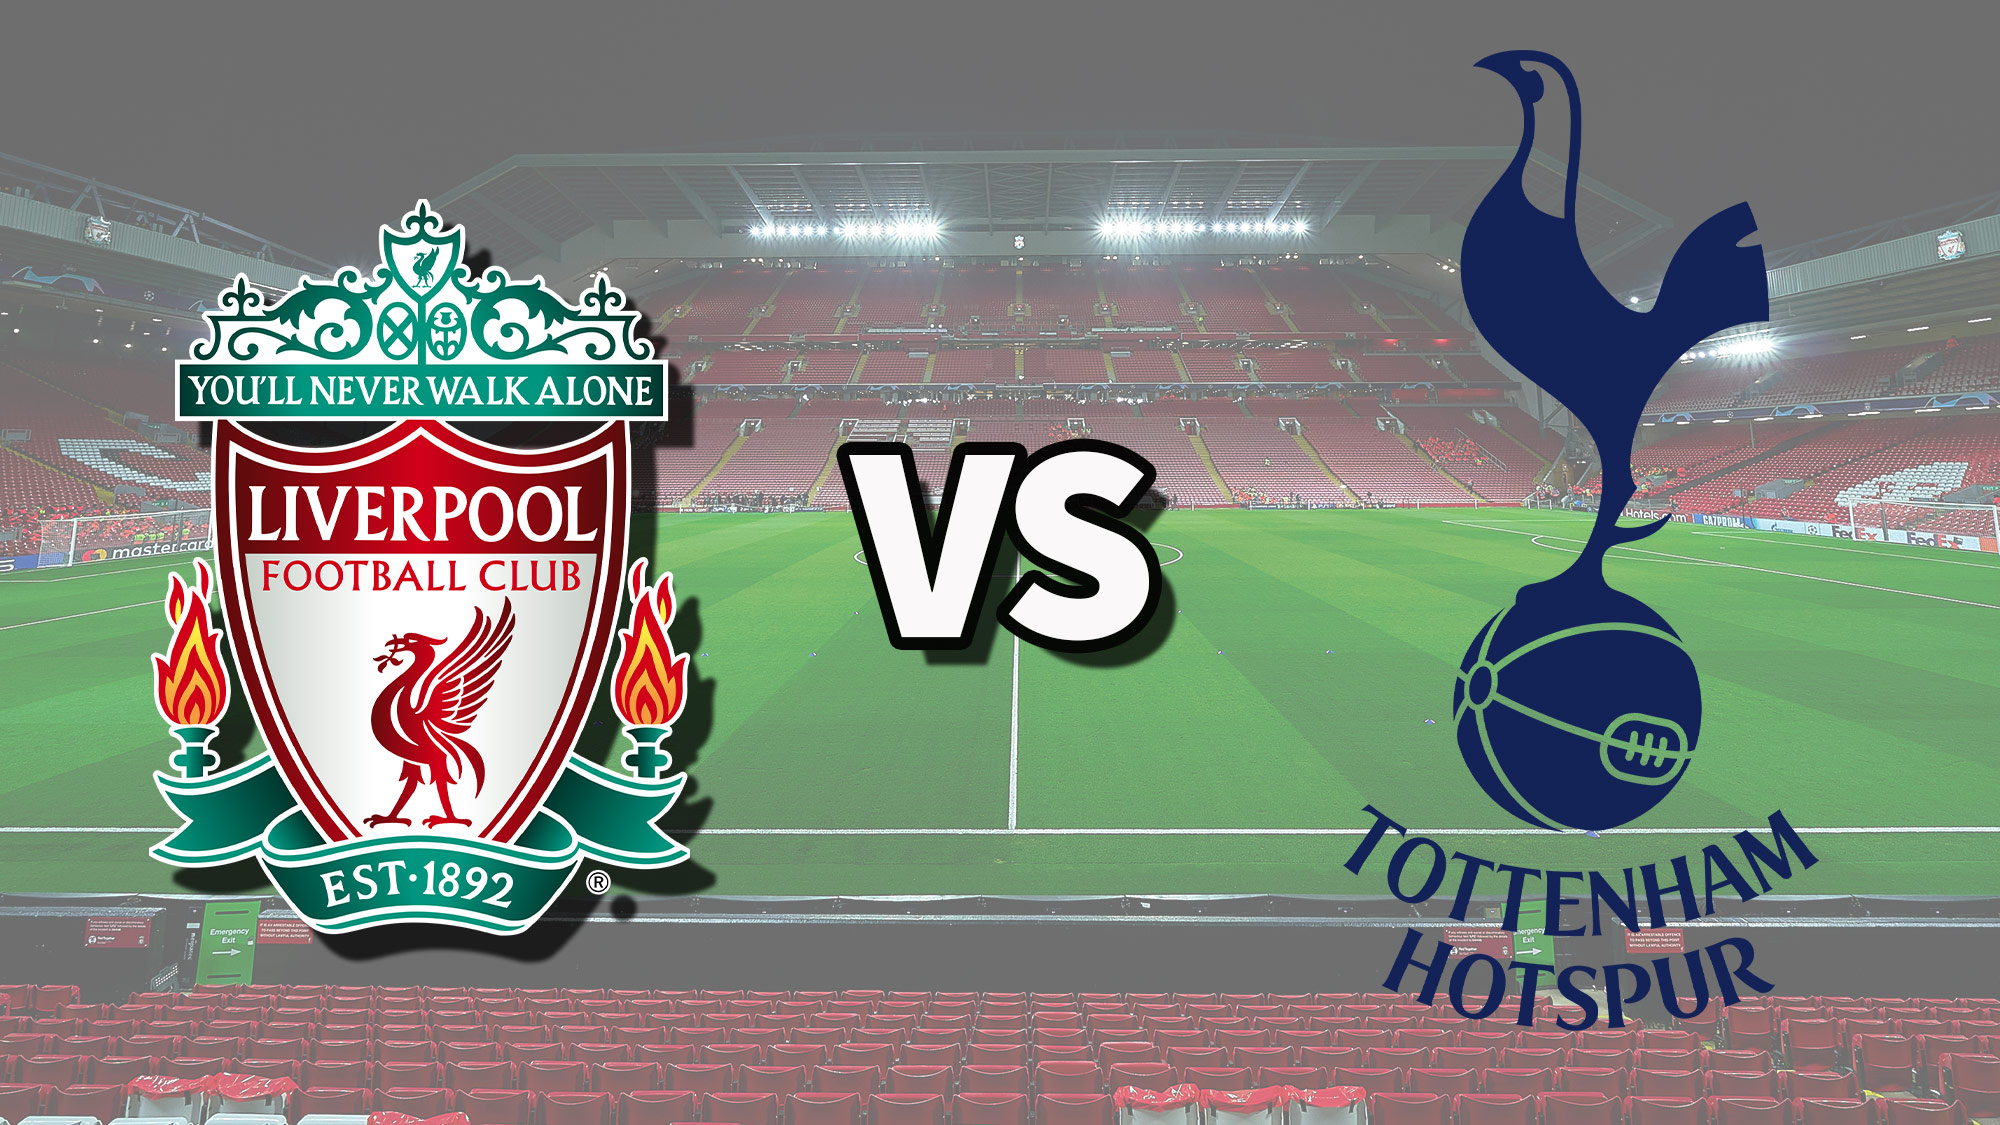 Liverpool vs Tottenham live stream How to watch Premier League game